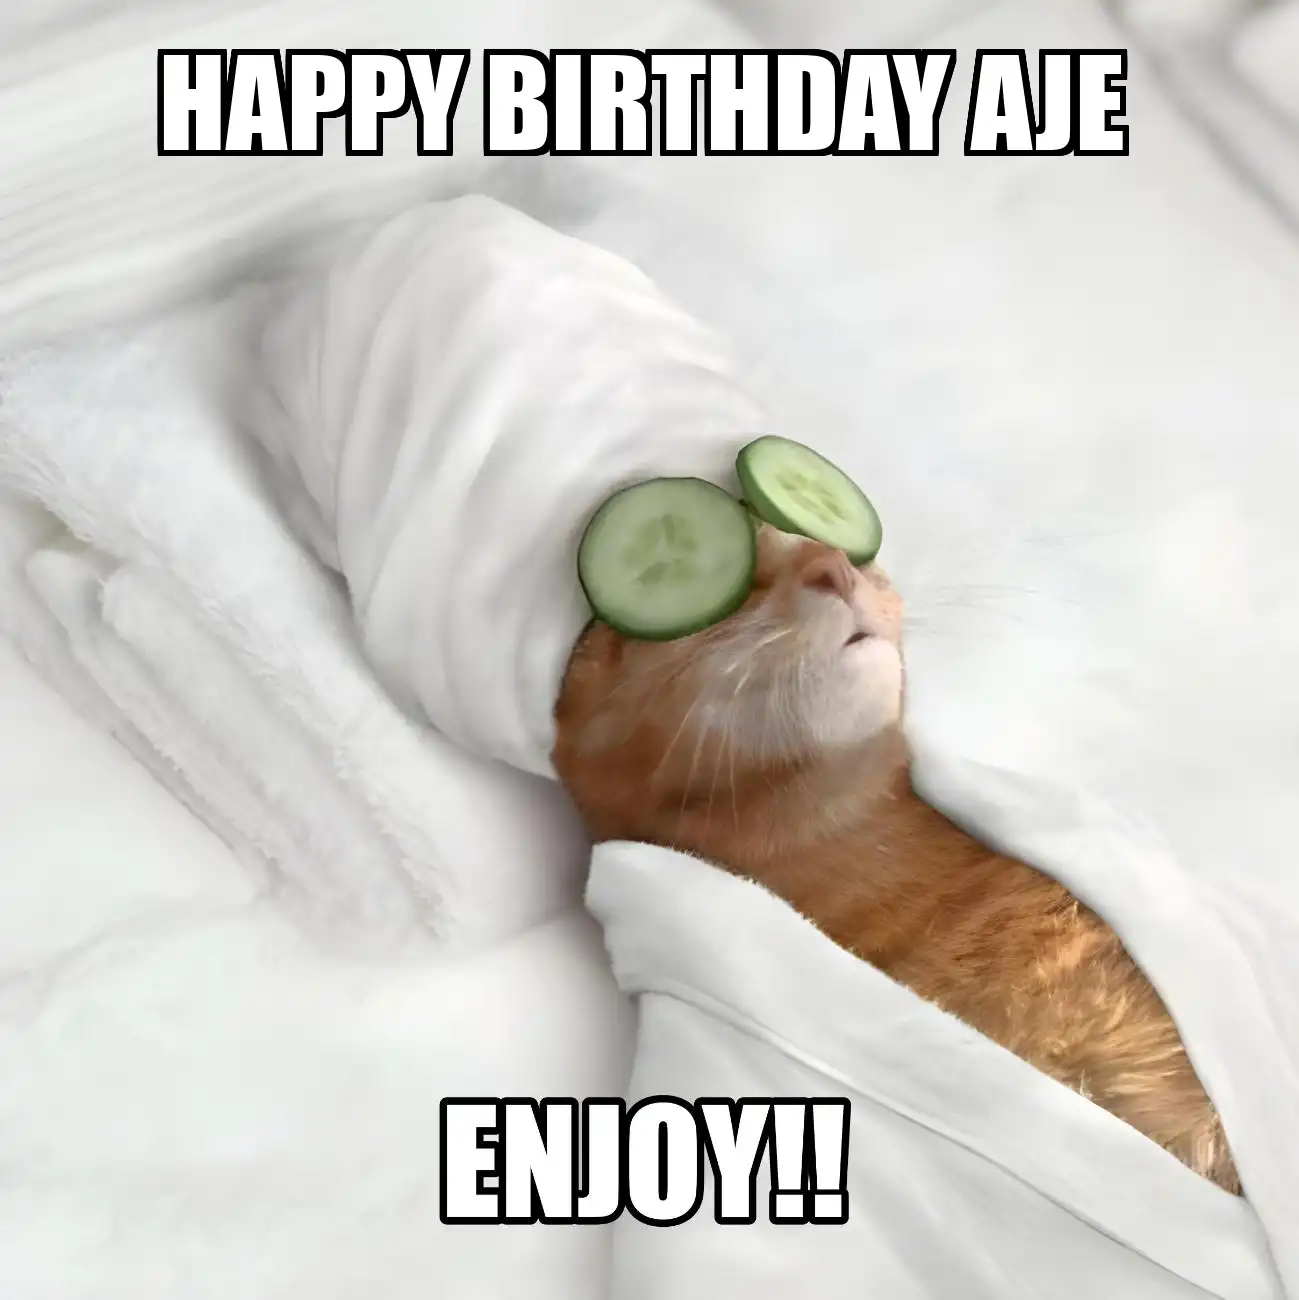 Happy Birthday Aje Enjoy Cat Meme